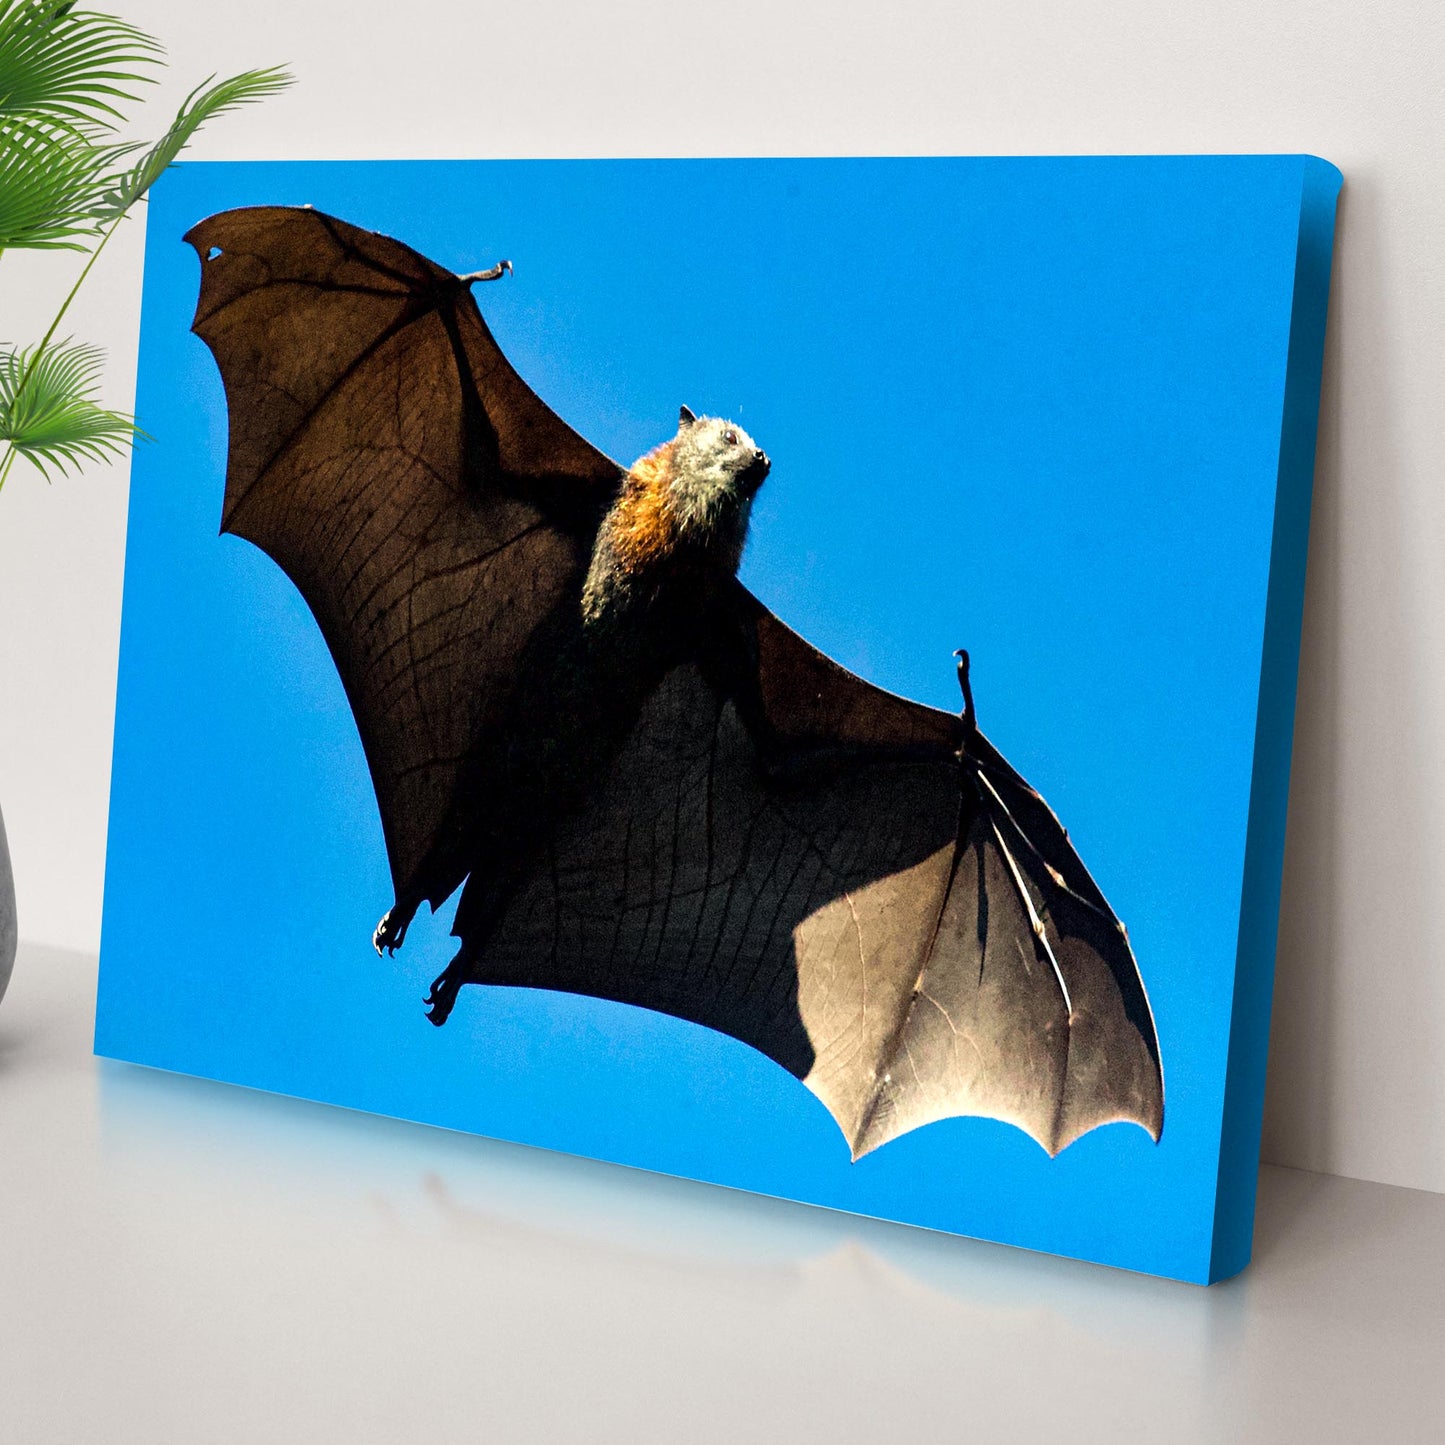 Aerial Bat in Its Natural Habitat Canvas